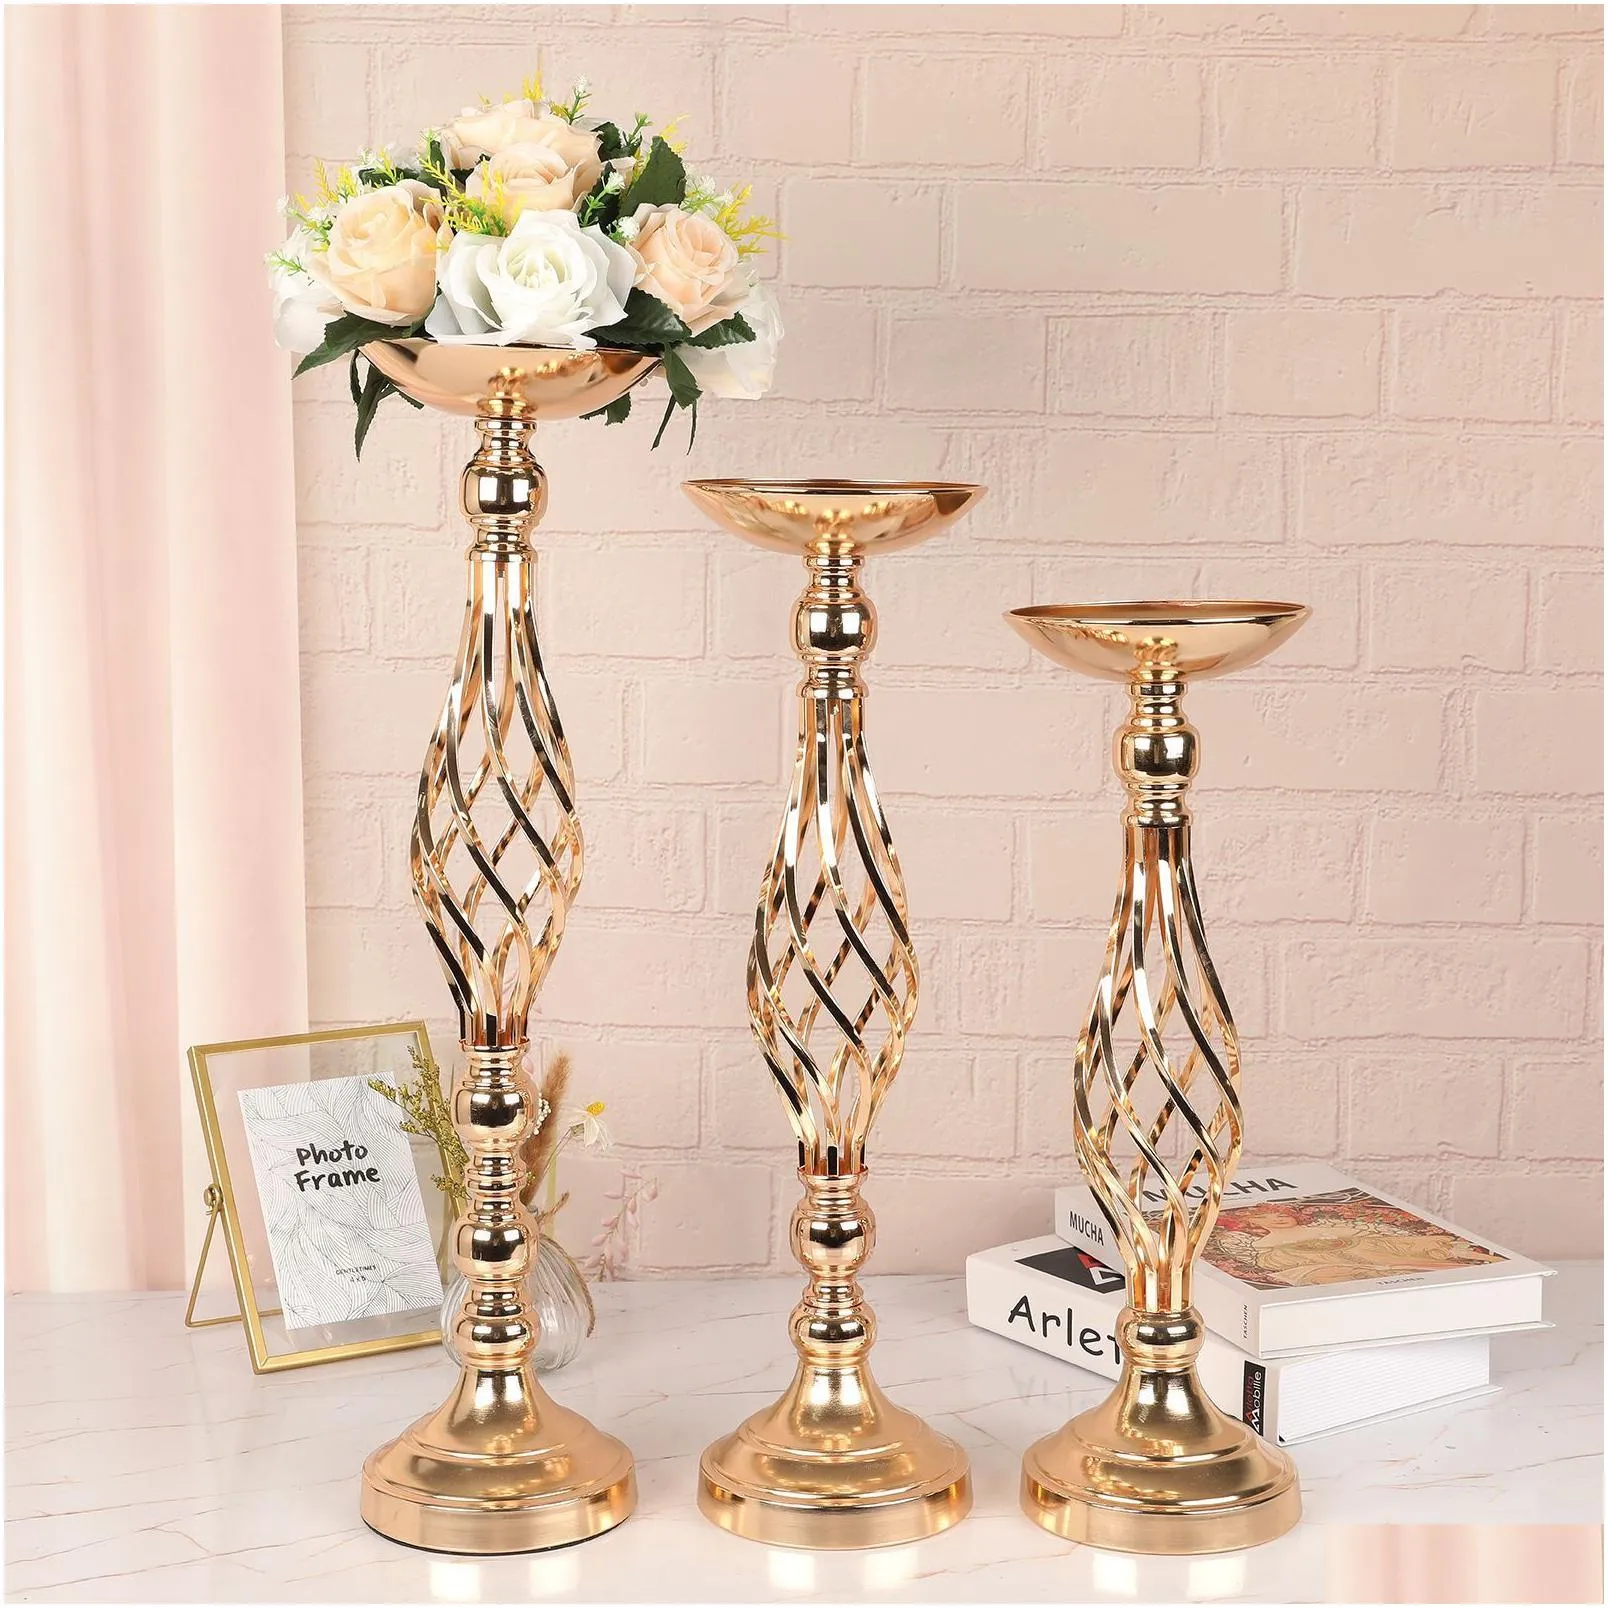 retro metal candle holders crafts candlestick wedding arrangement home decoration ornament